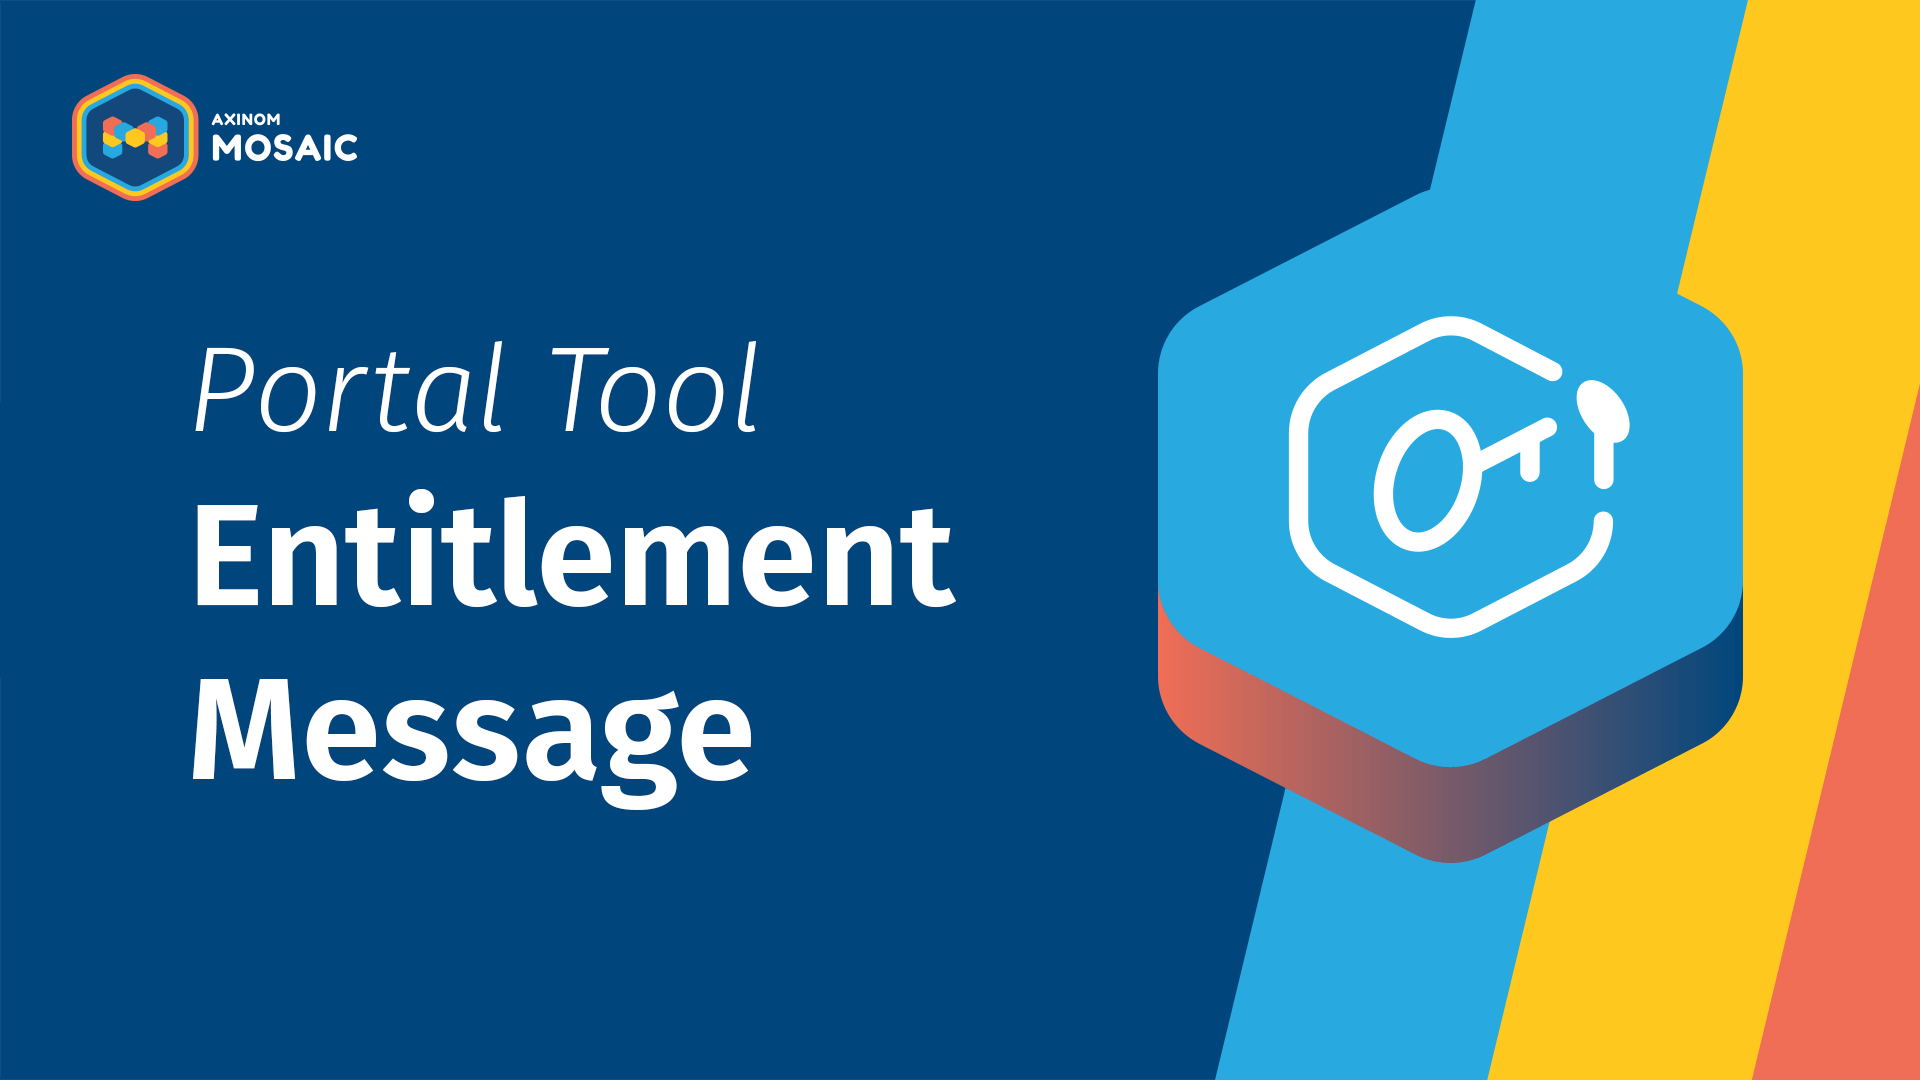 Portal tool: Entitlement Message